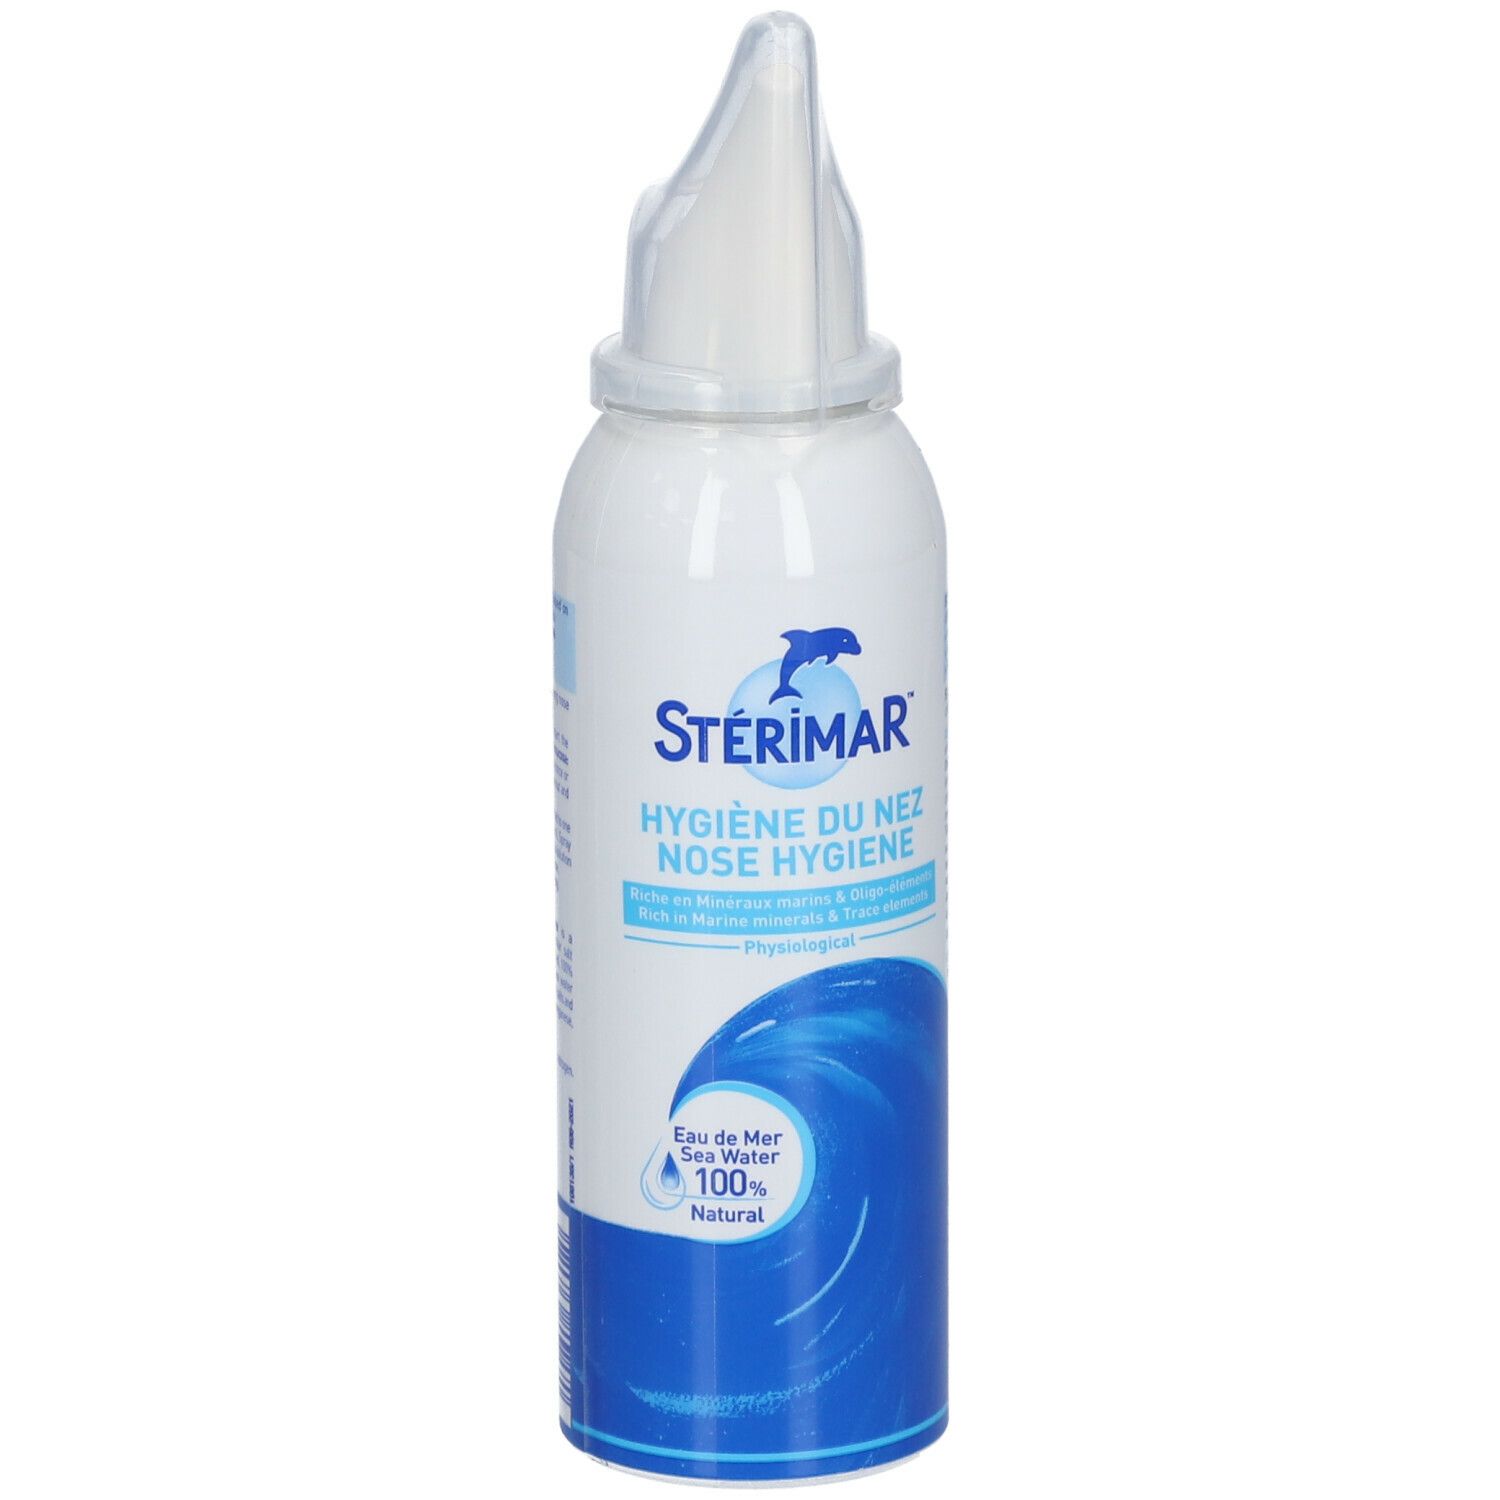 Sterimar eau de mer solution nasale